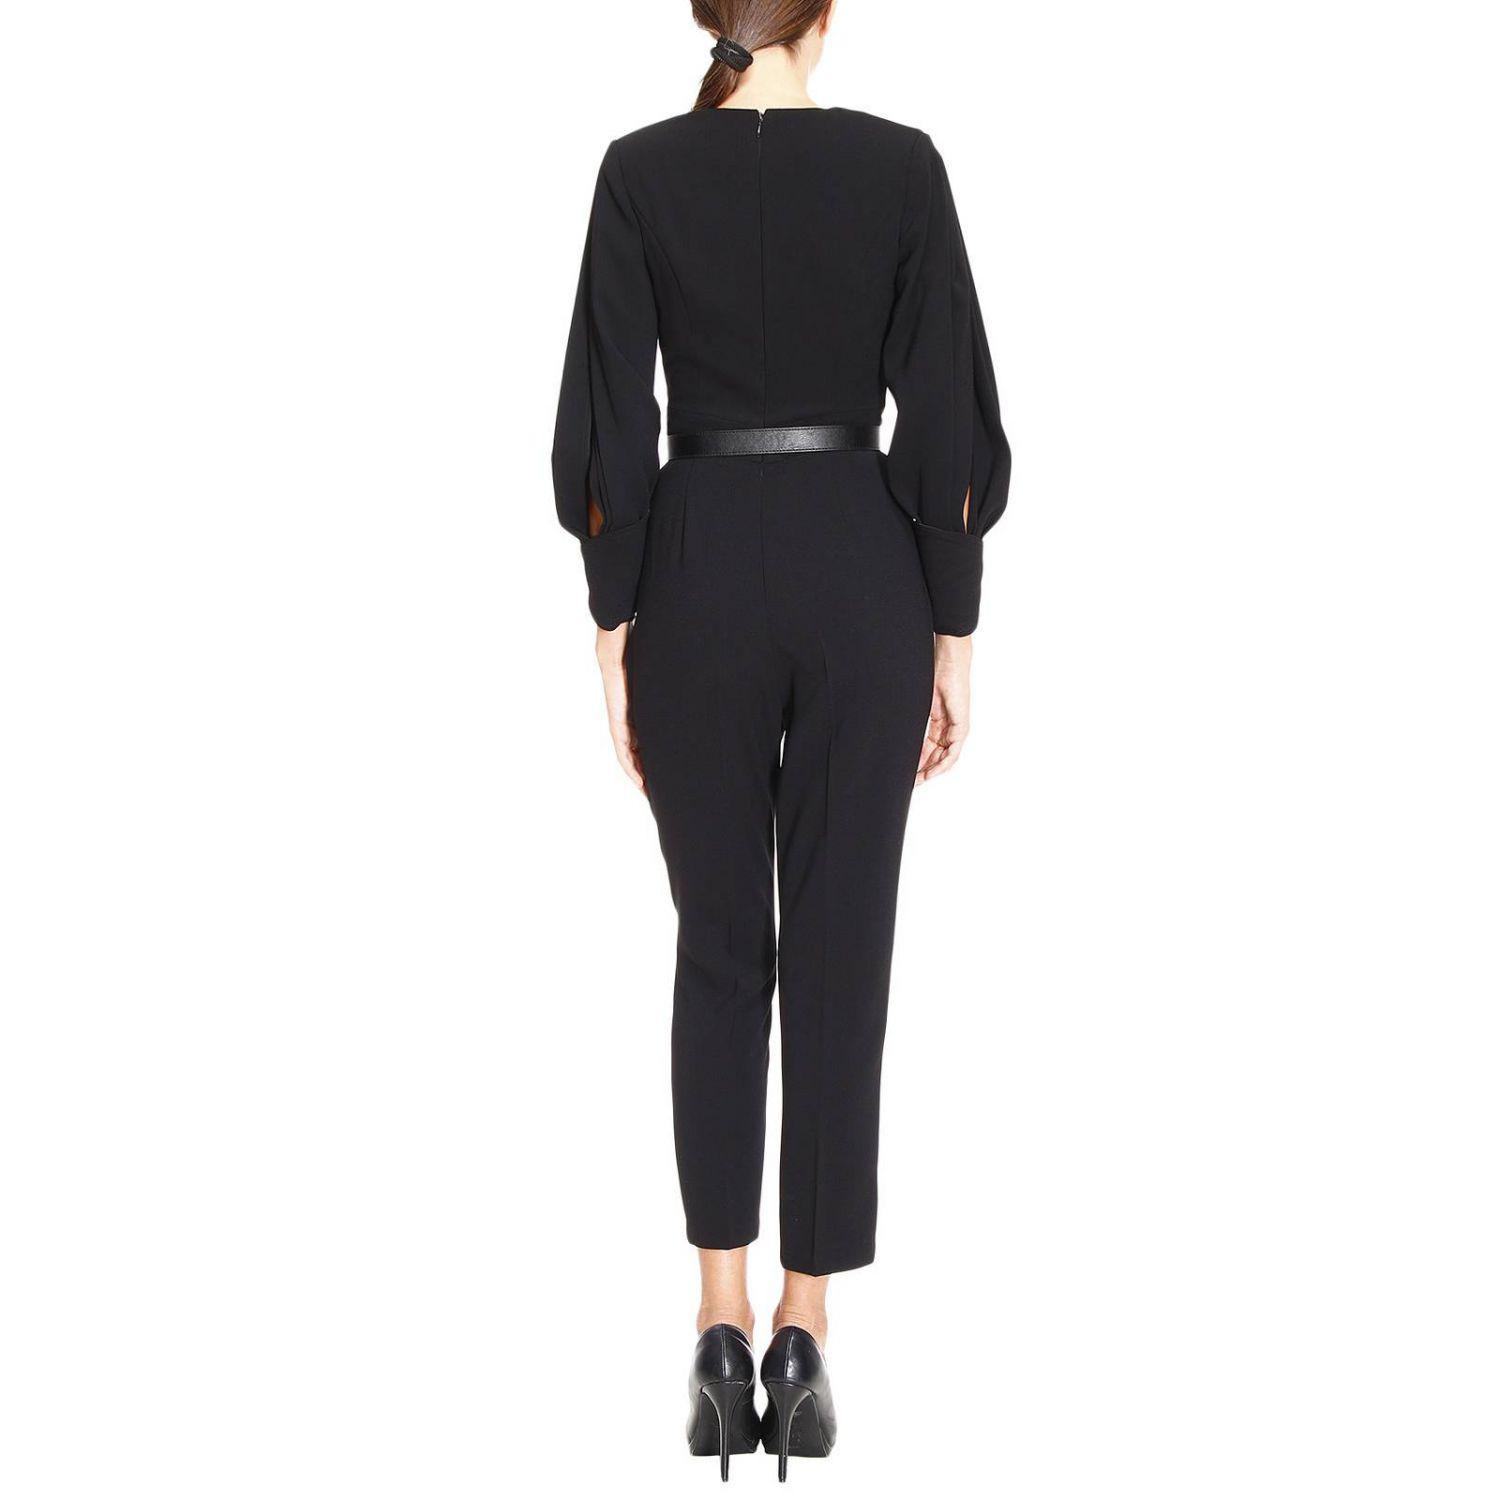 Lyst - Elisabetta Franchi Jumpsuits Dress Women in Black